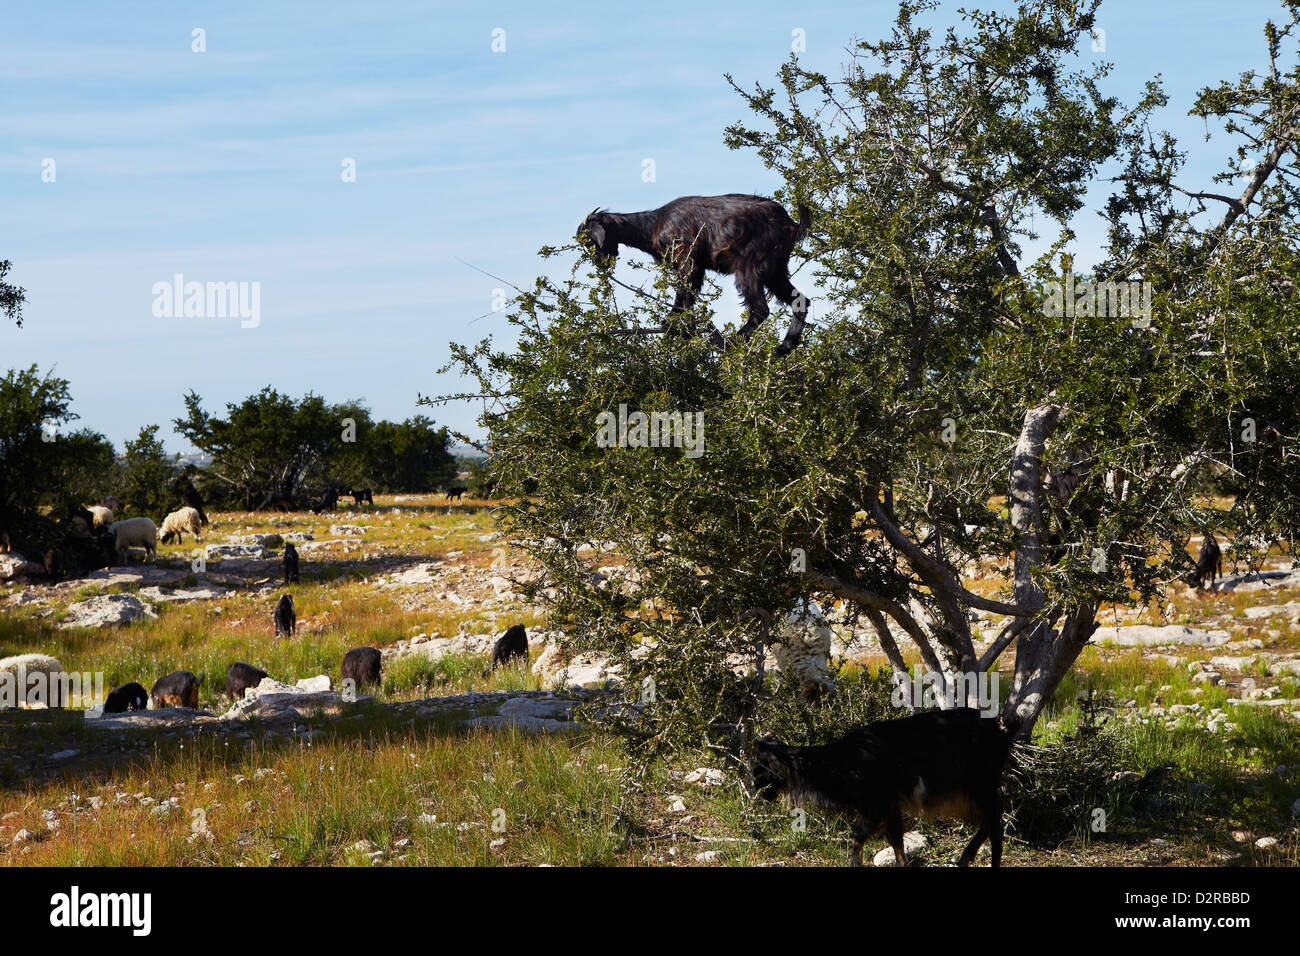 Ziege im Baum, Marokko Stockfoto